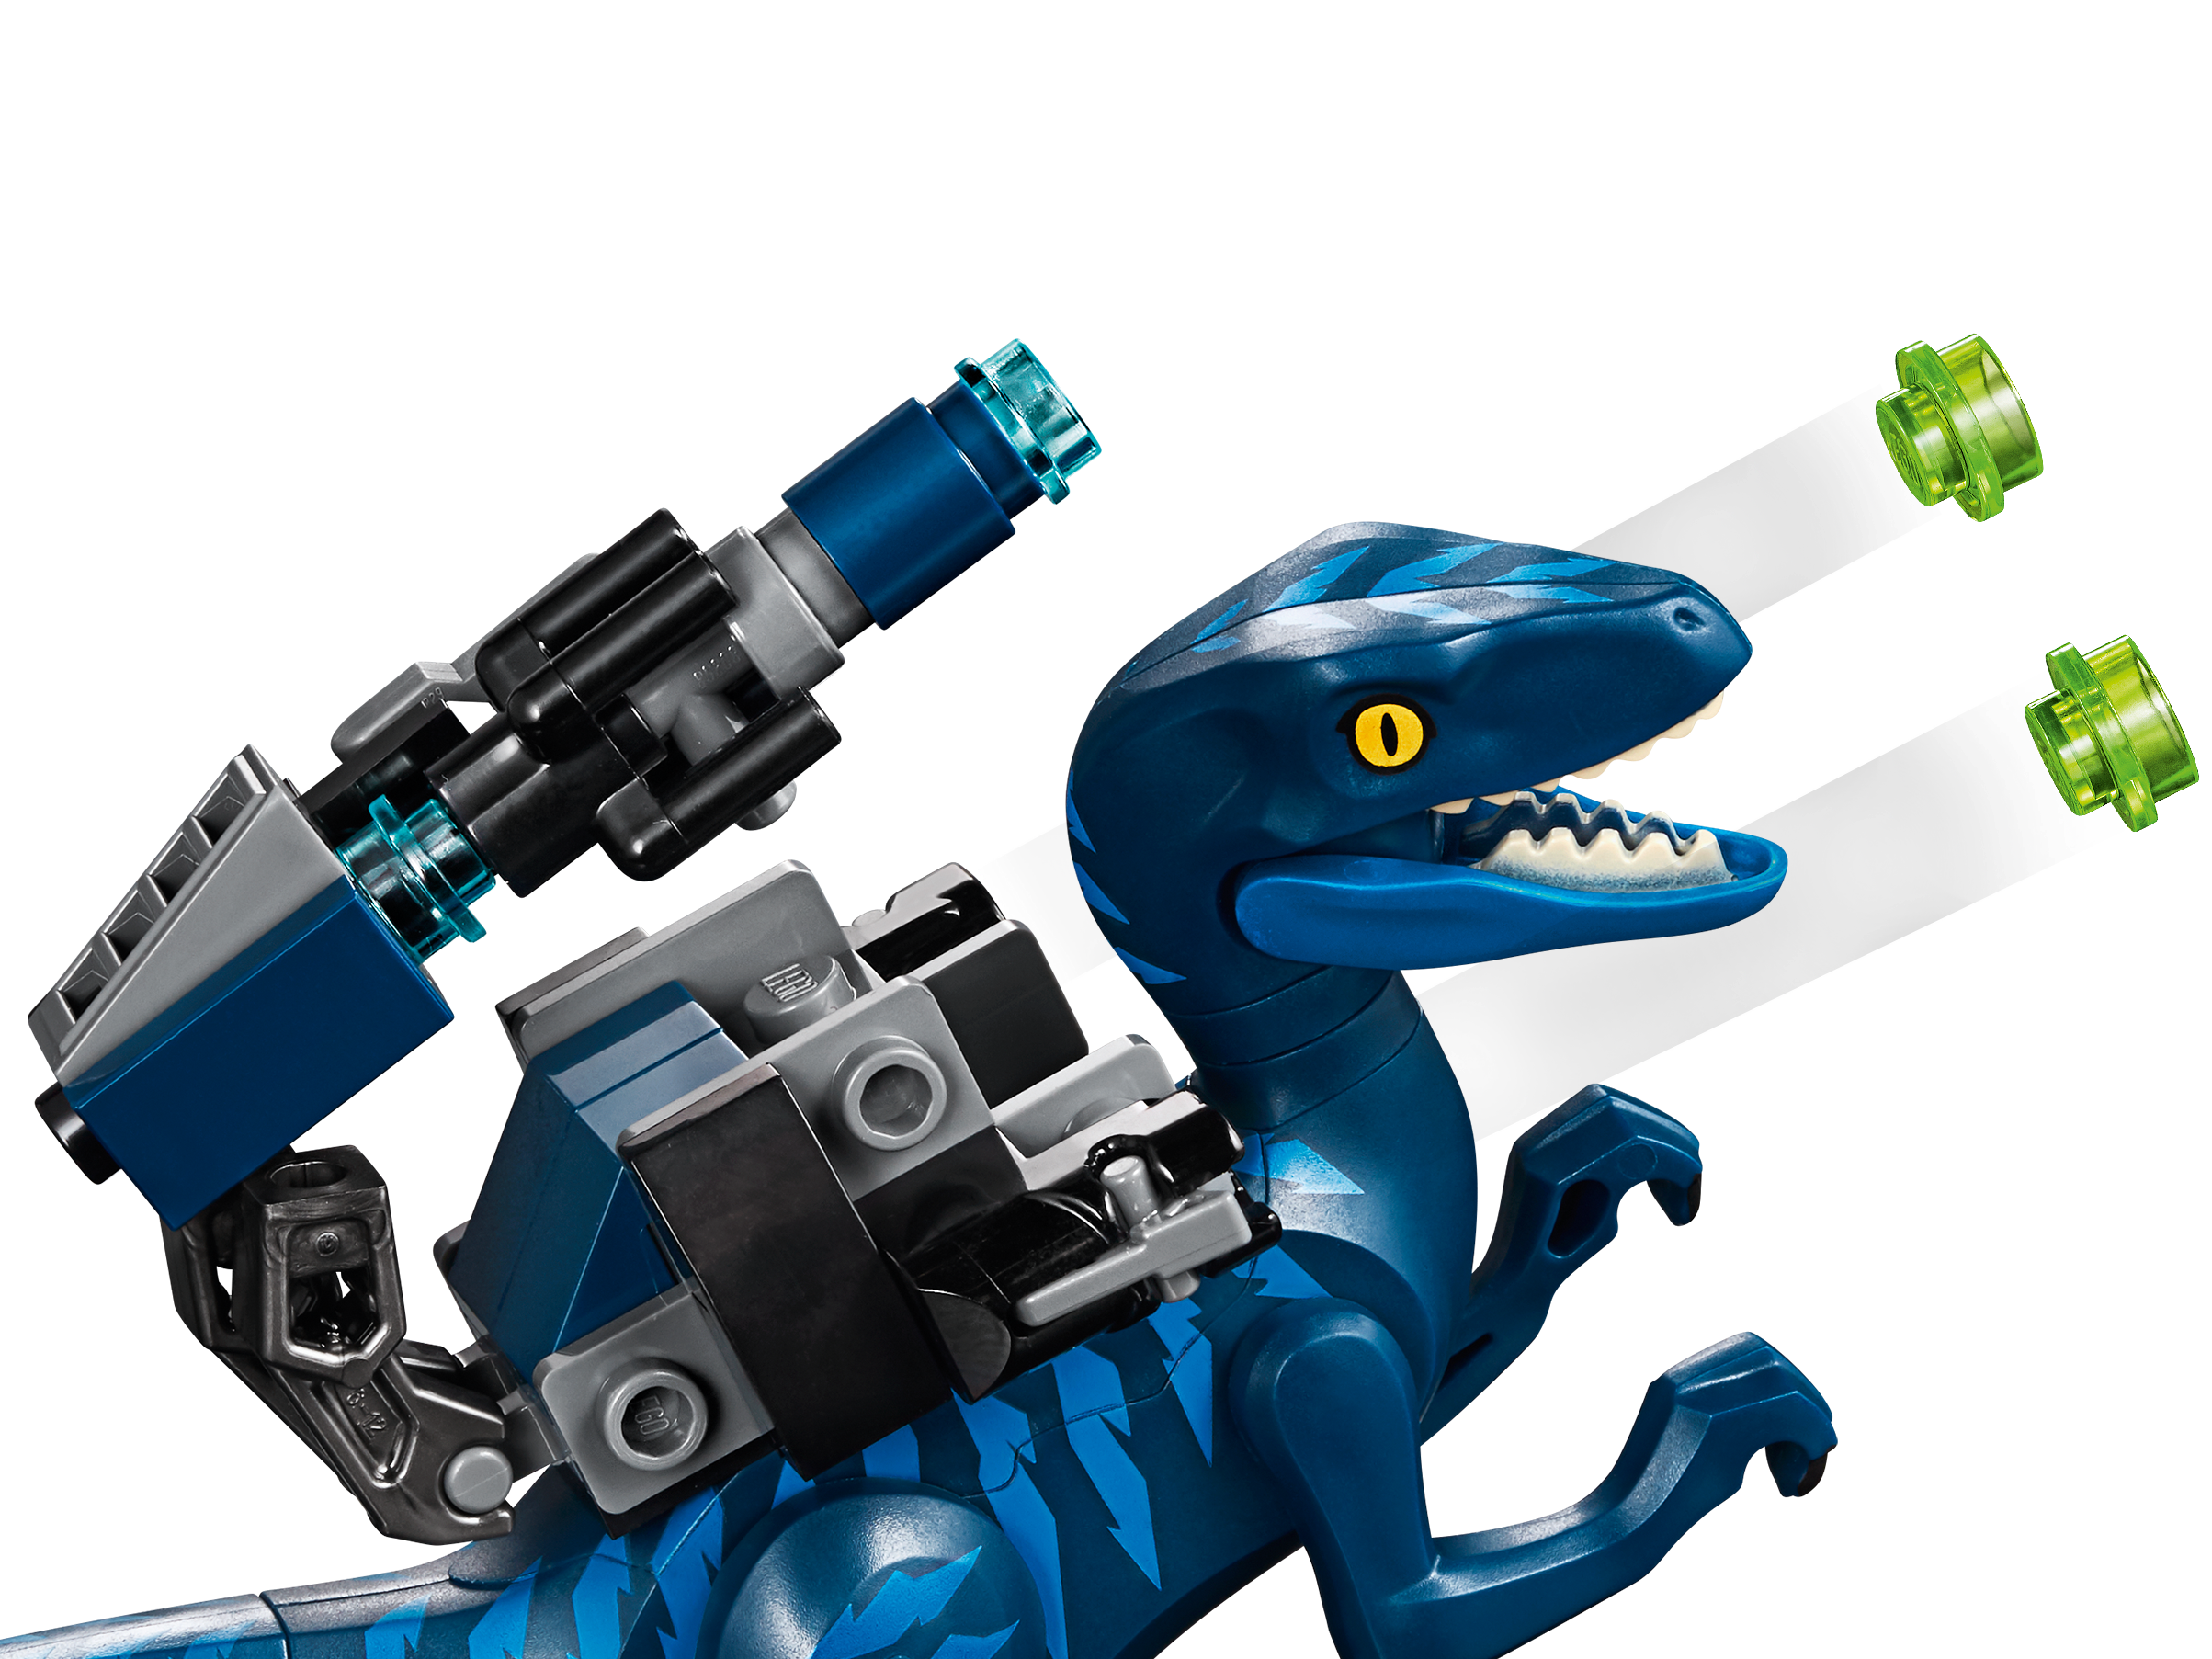 Sticker Sheet from 70826 Rex's Rex-treme Offroader NEW LEGO Parts NEW